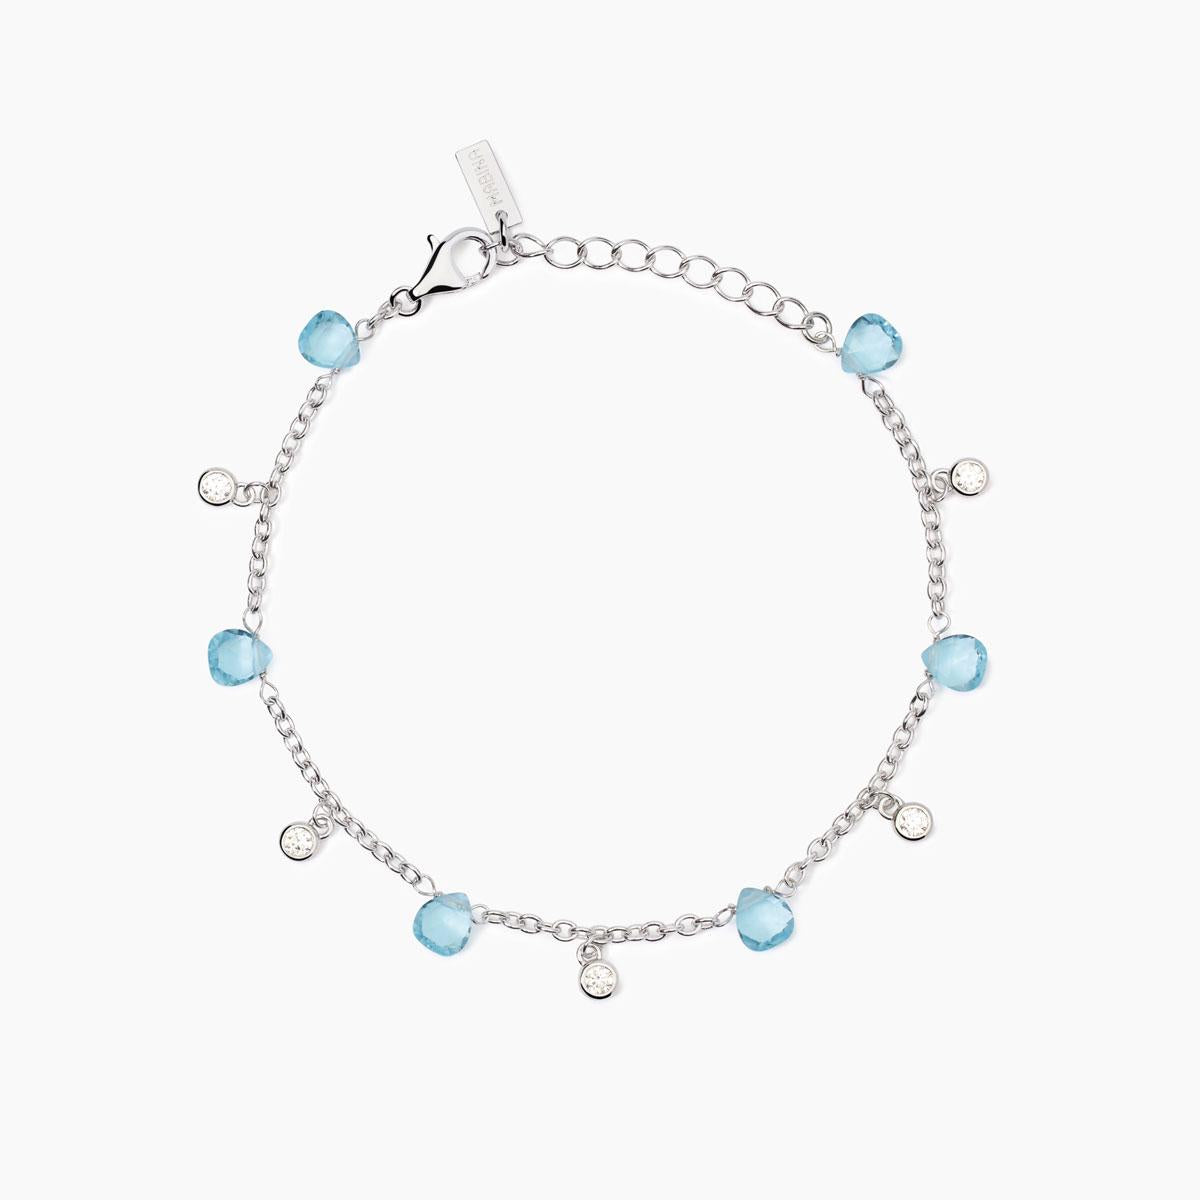 Mabina Woman - Bracelet with blue glass elements BEAUTY CODE - 533893